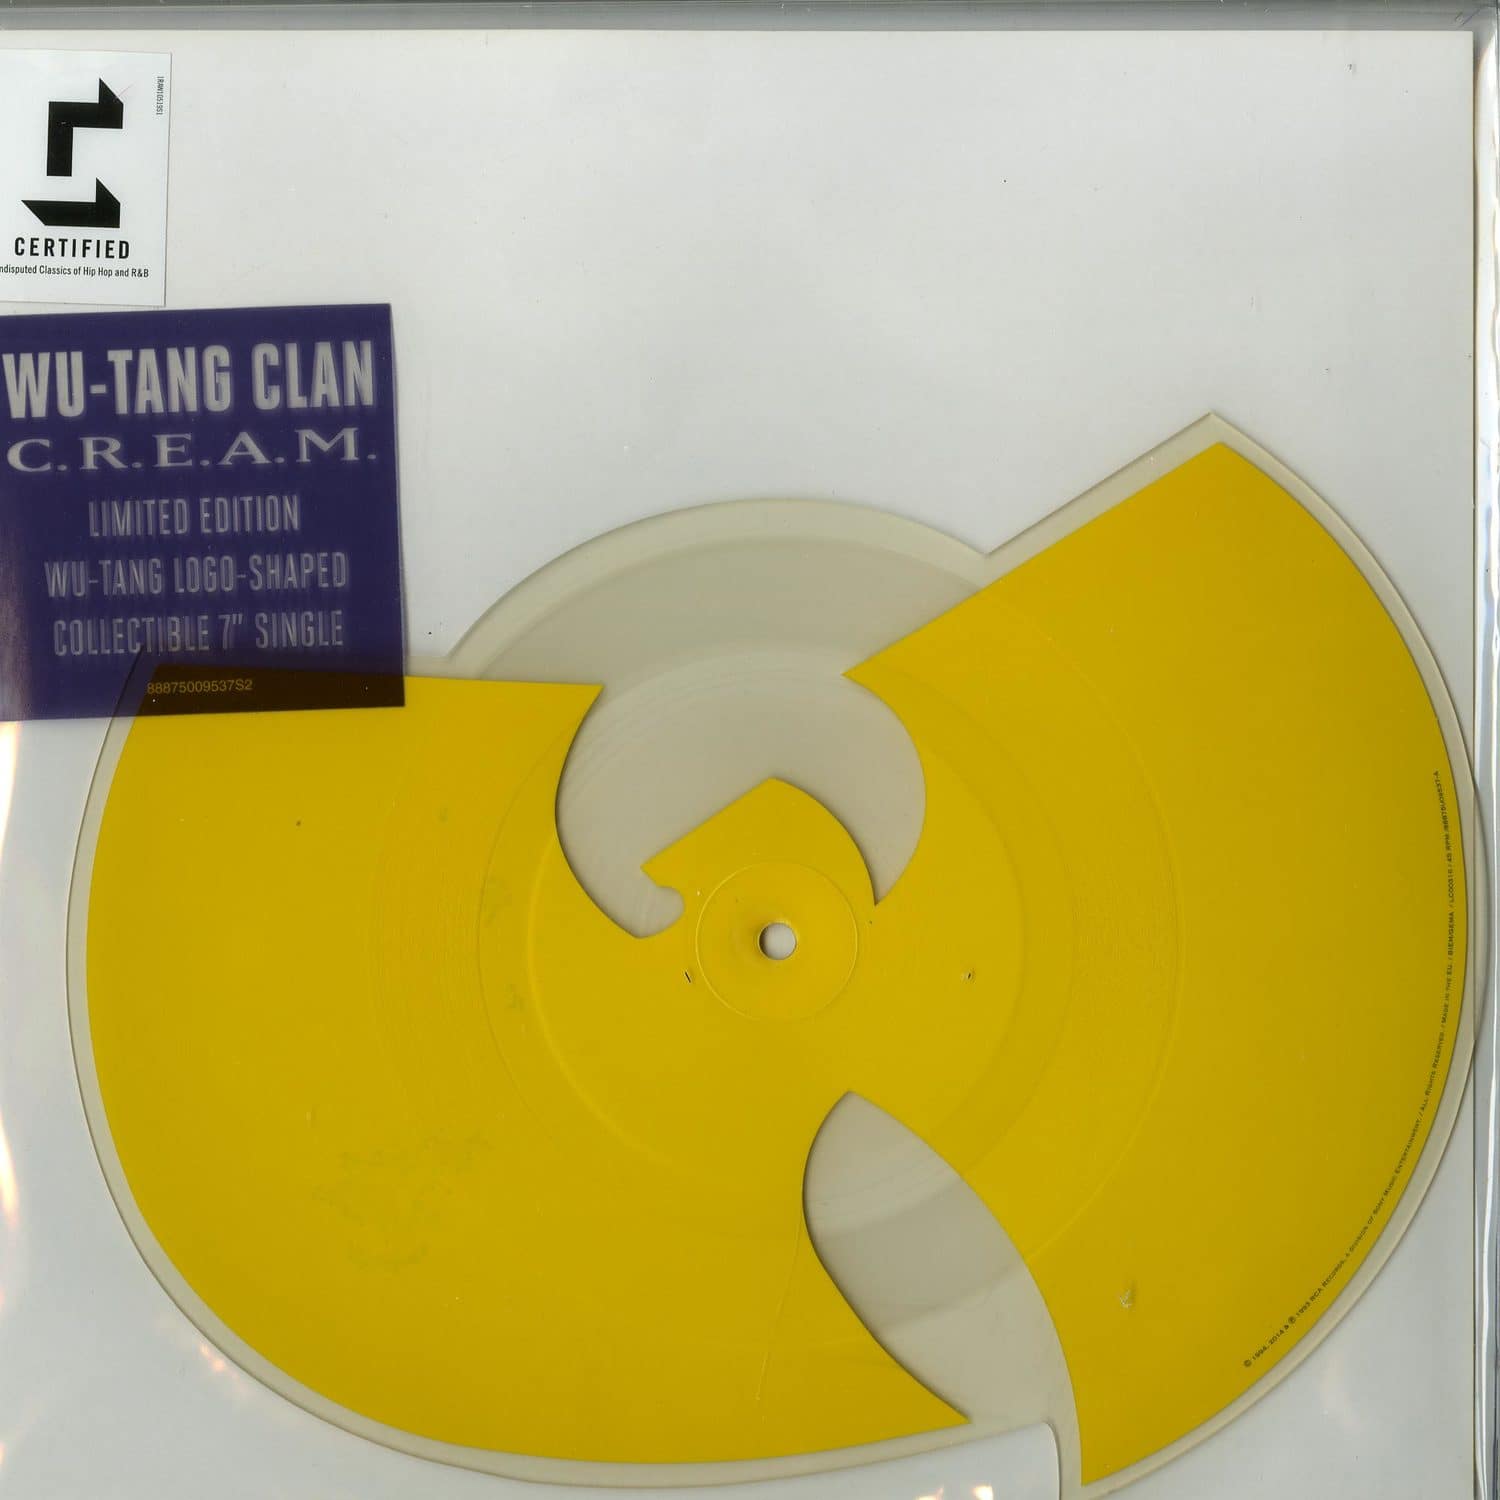 WU-TANG CLAN - C.R.E.A.M. / DA MYSTERY OF CHESSBOXIN - HIP HOP RAP